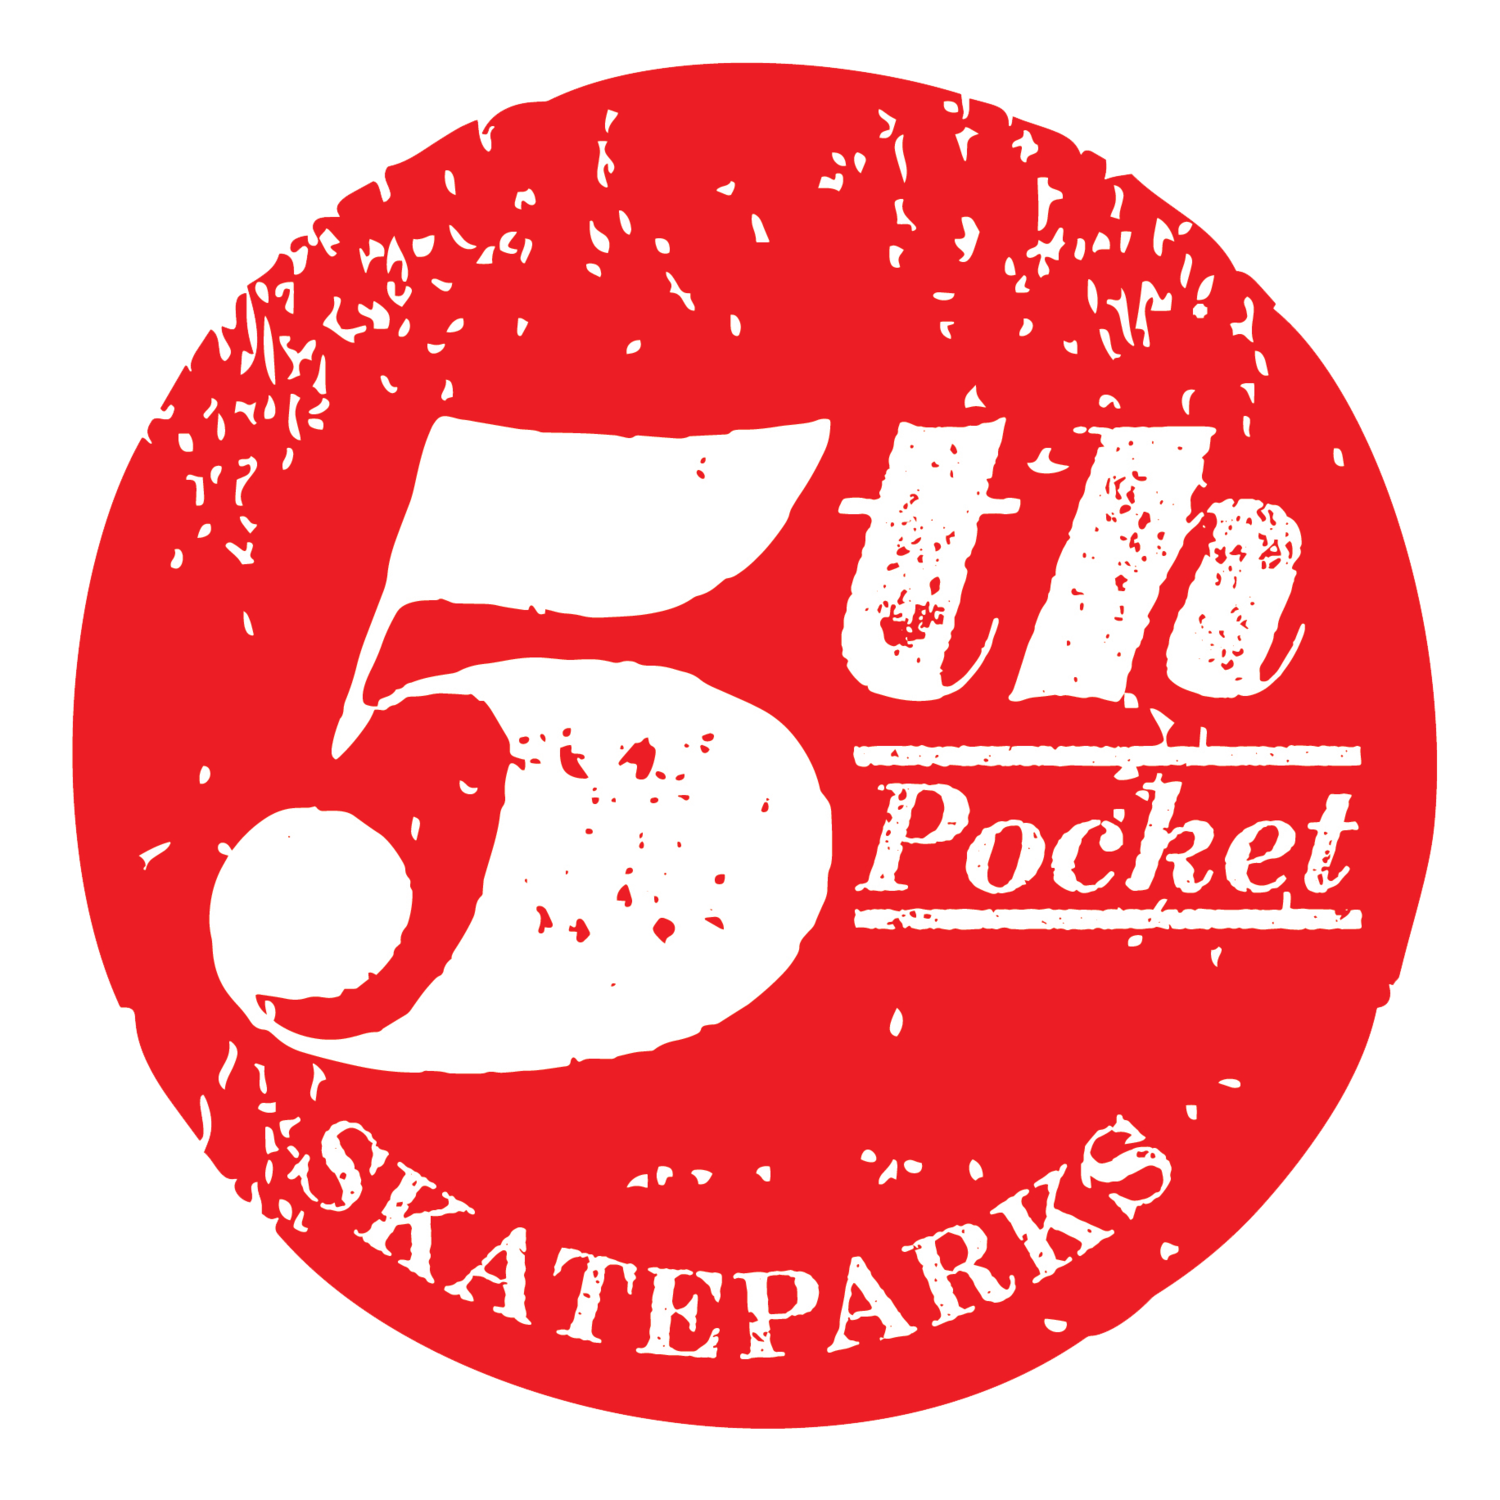 5th Pocket Skateparks